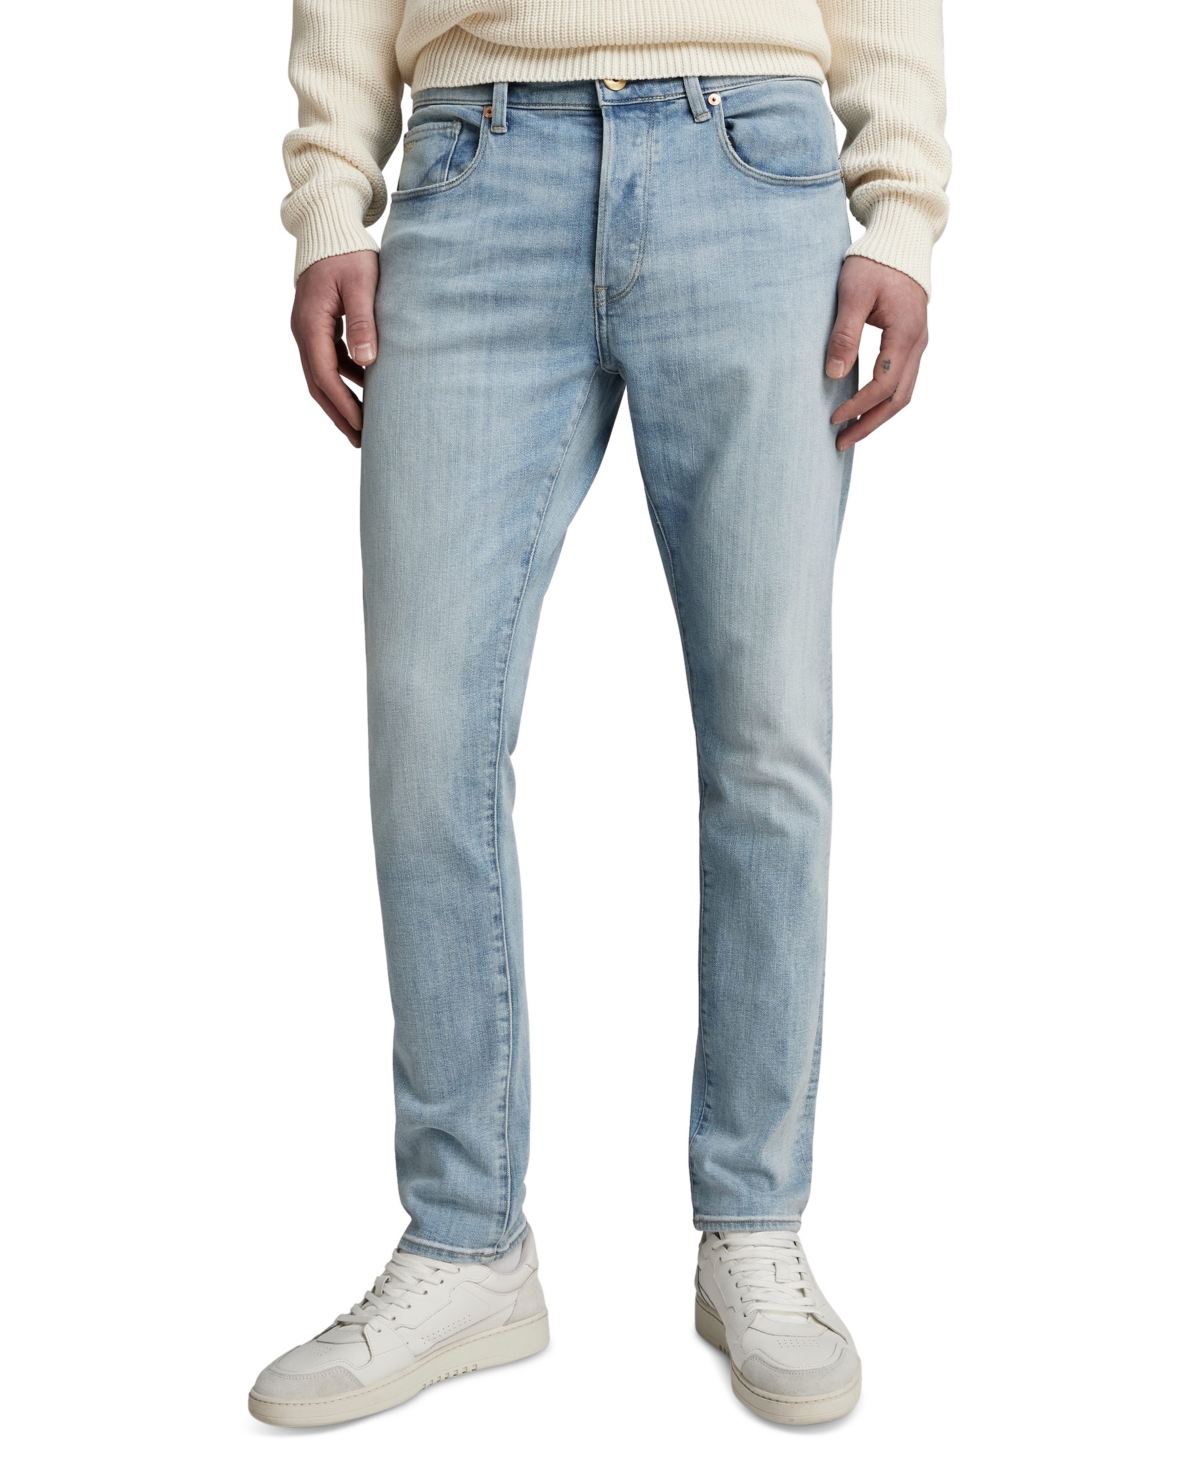 Men's Slim-Fit Jeans - Sun Faded Mirage Blue